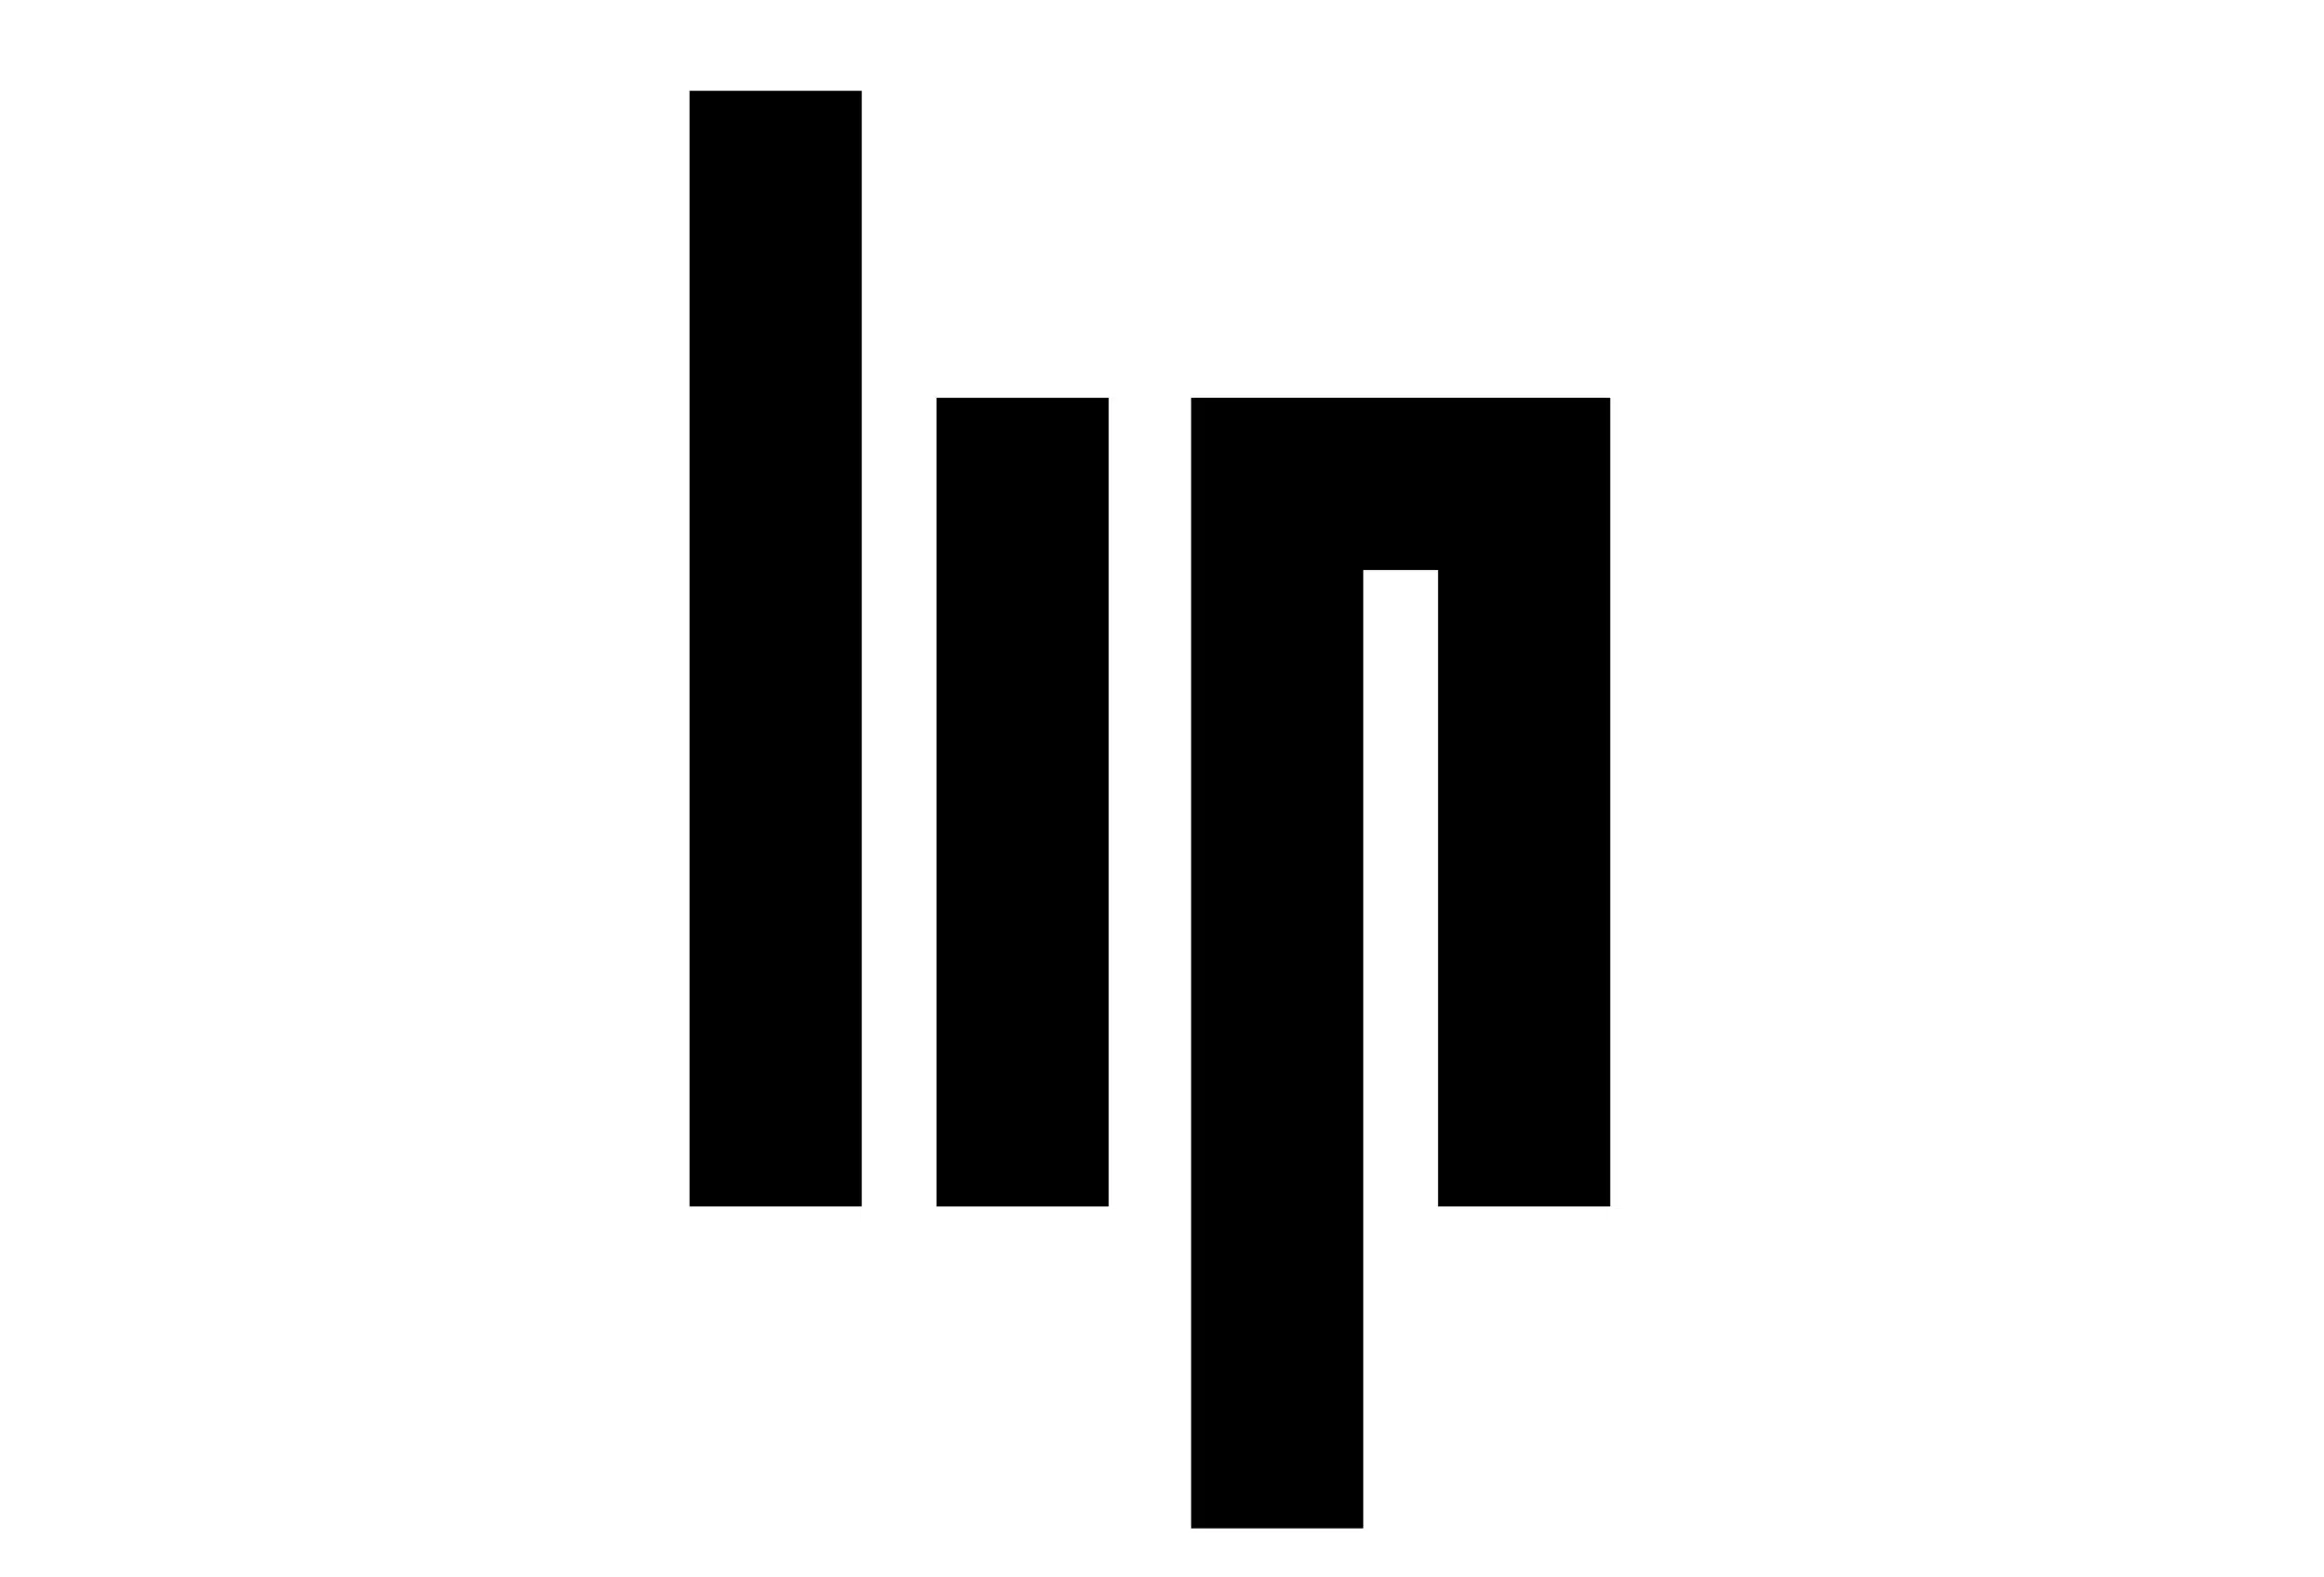 logo LIP